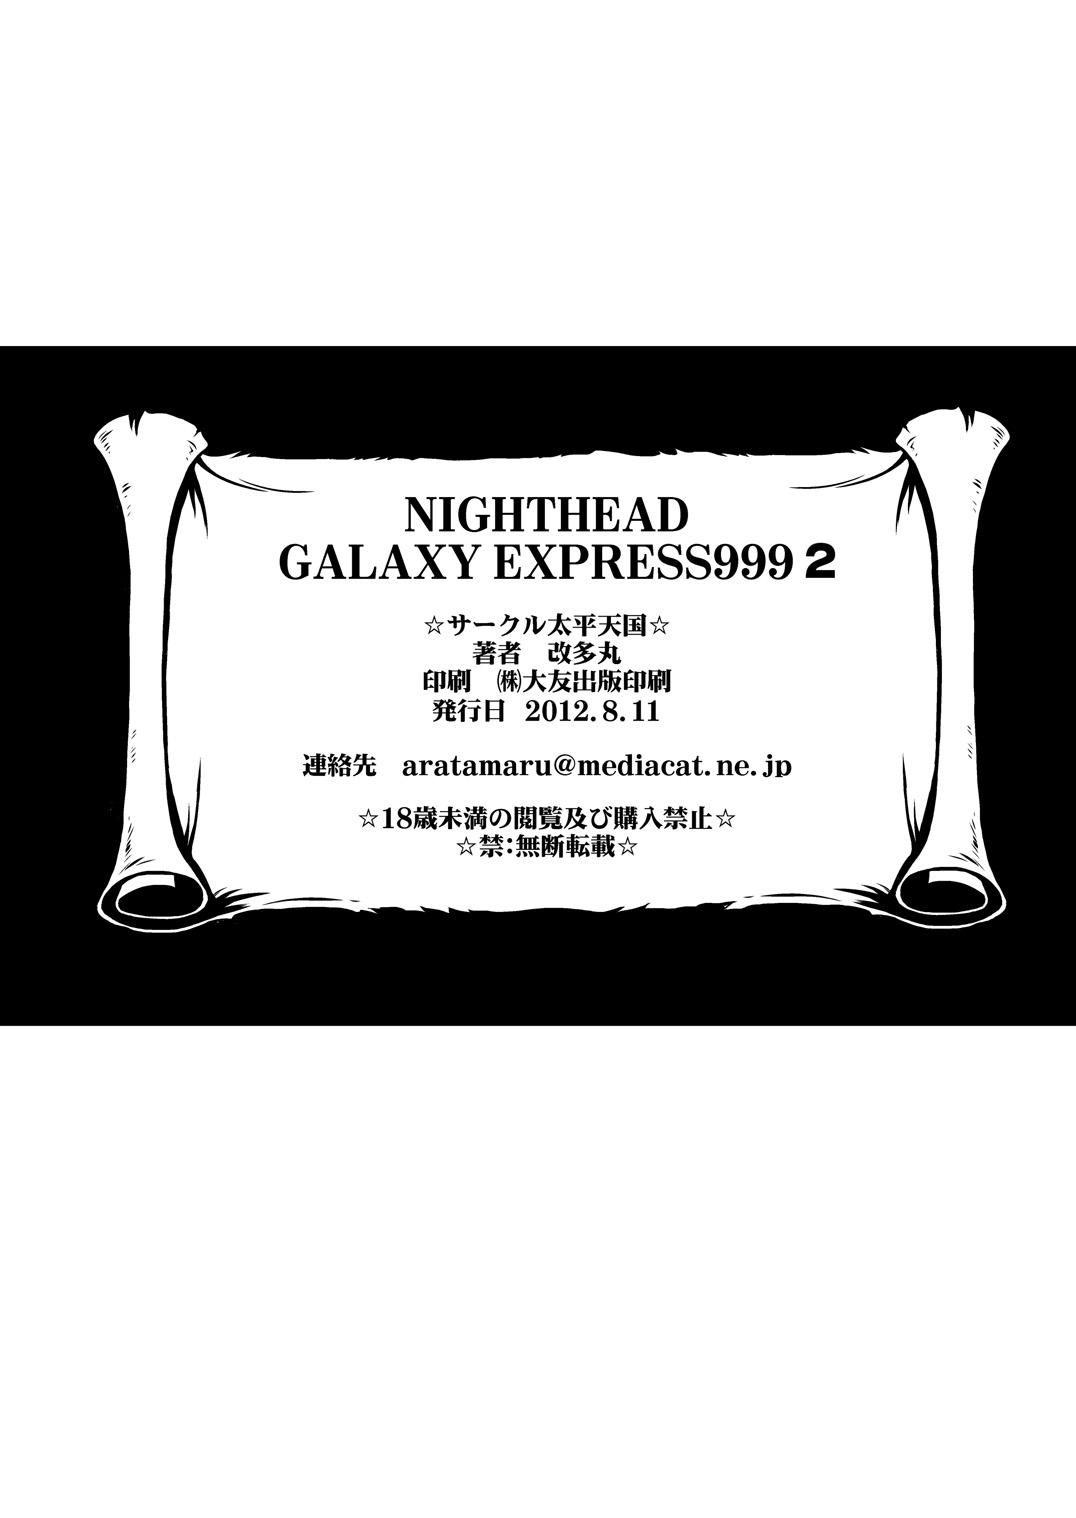 Masterbate NIGHTHEAD GALAXY EXPRESS 999 2 - Galaxy express 999 3some - Page 23